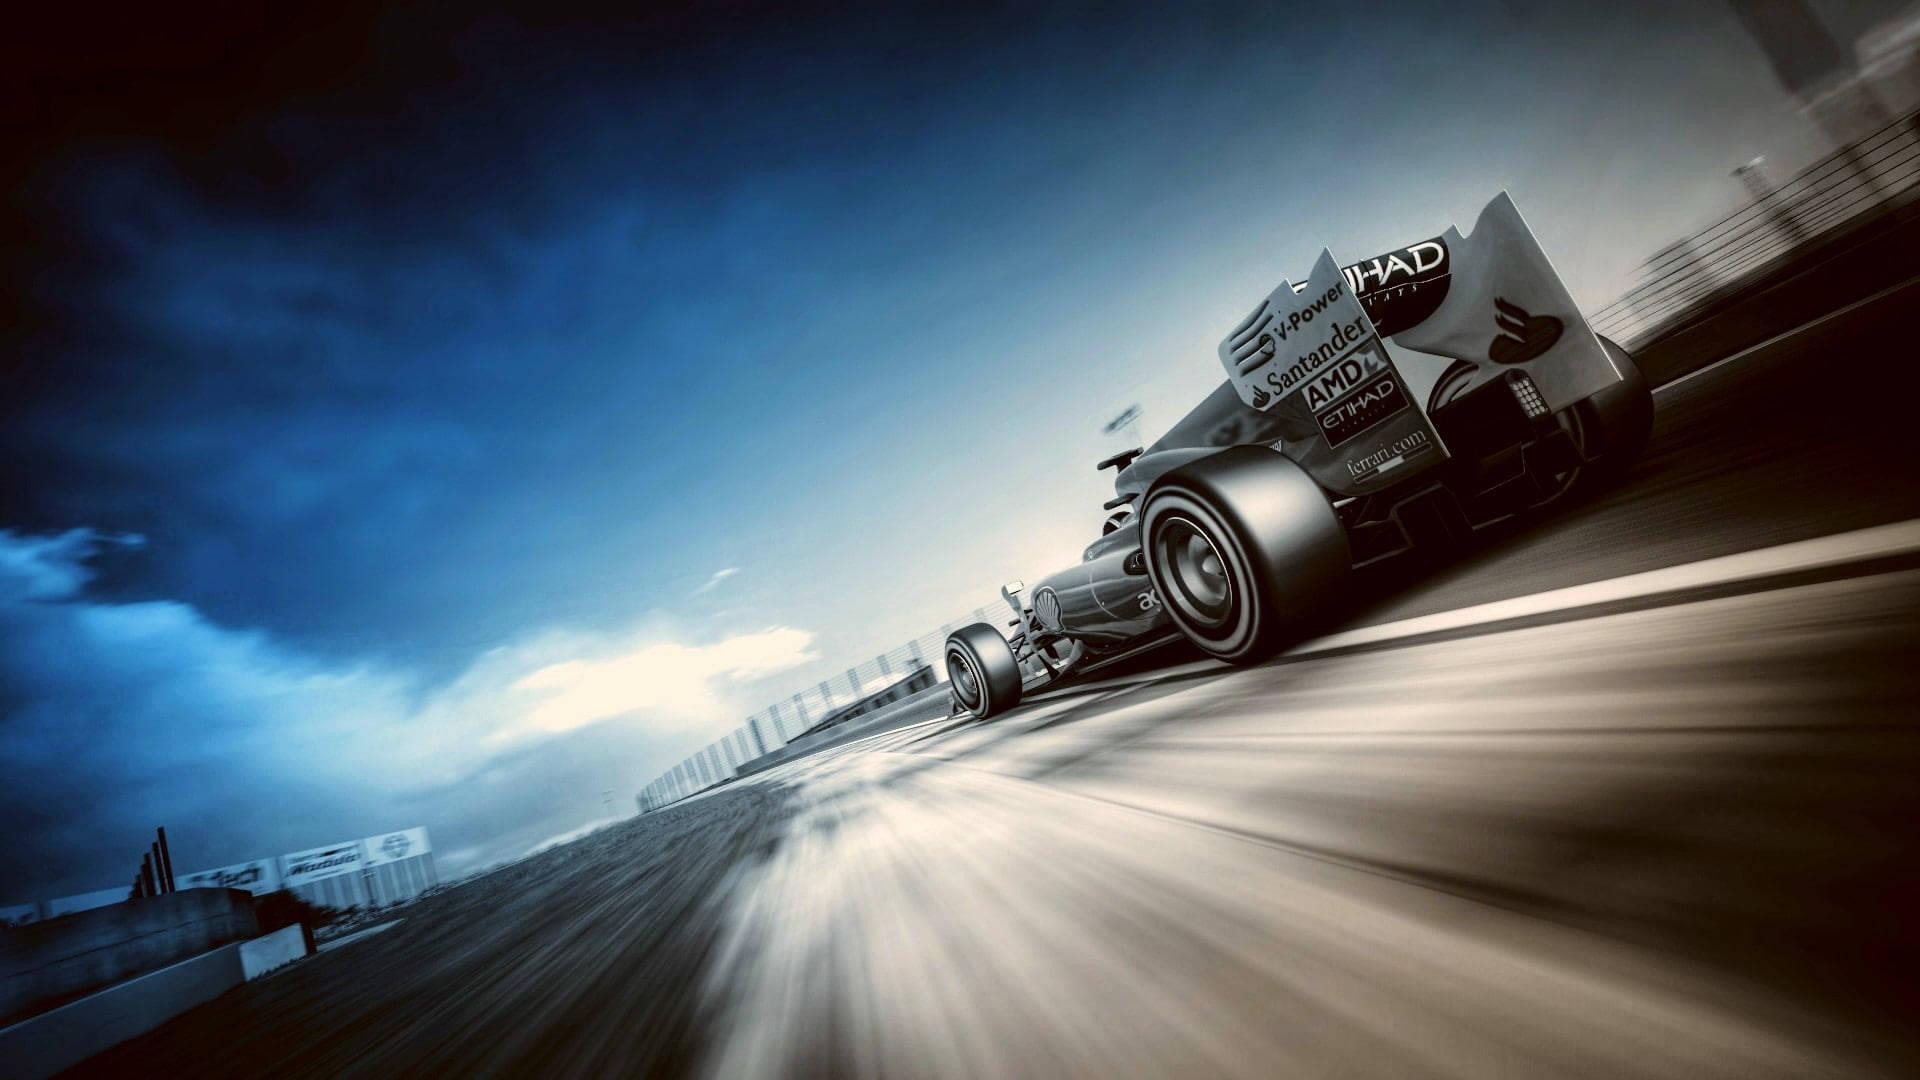 Pulse Of The Race - Thrilling F1 Racing Fan Art